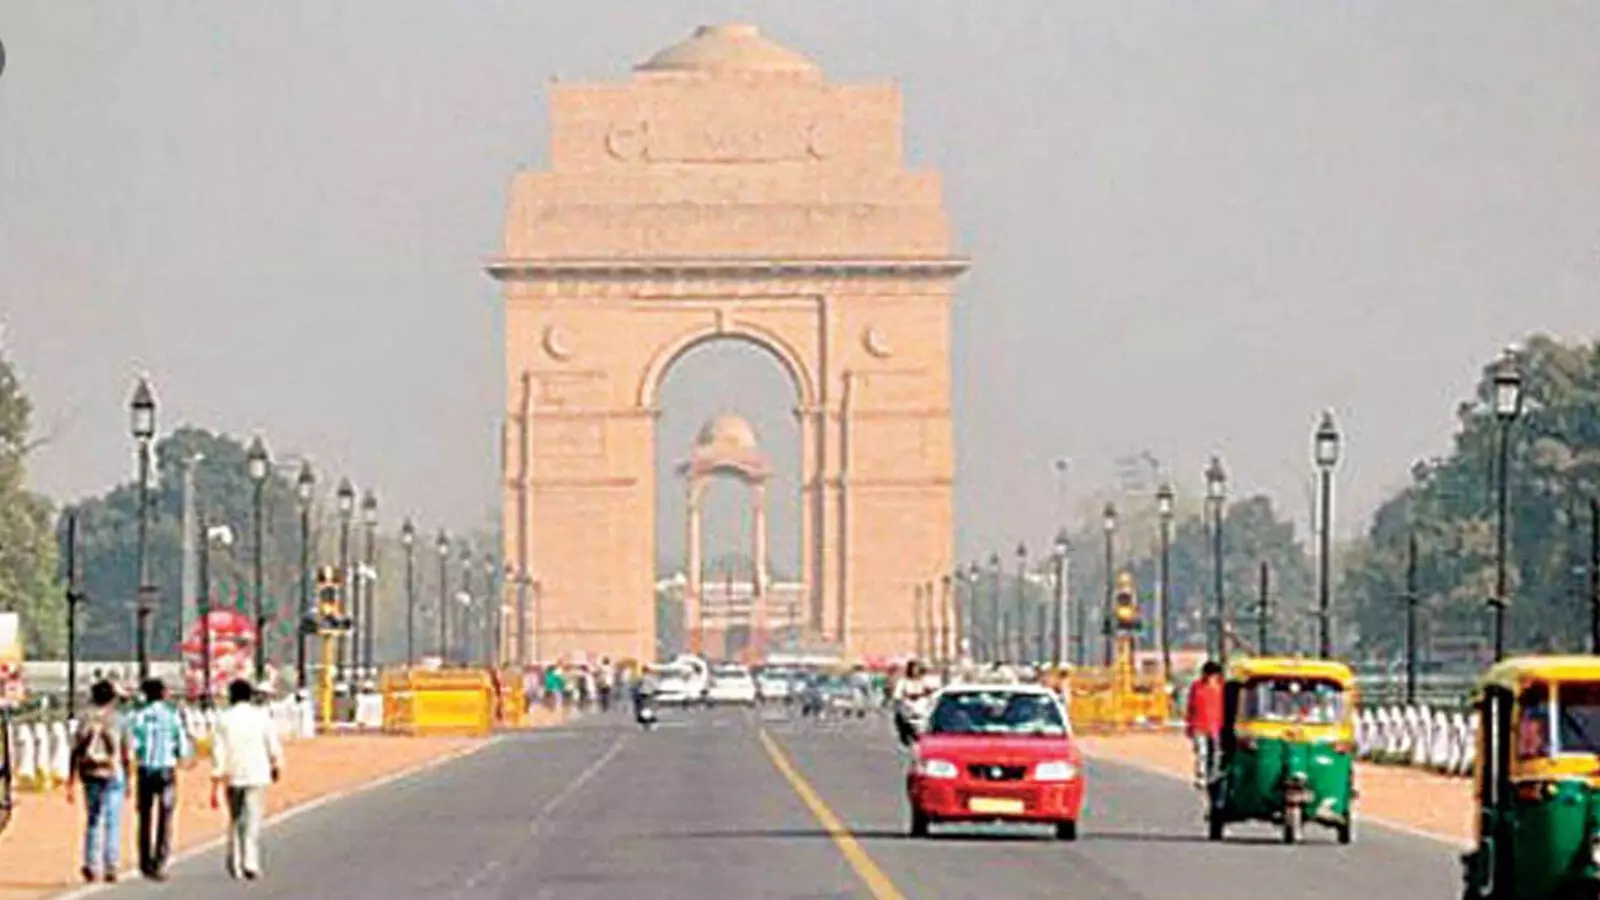 Weather Update: Delhi records highest temperature at 36 degree